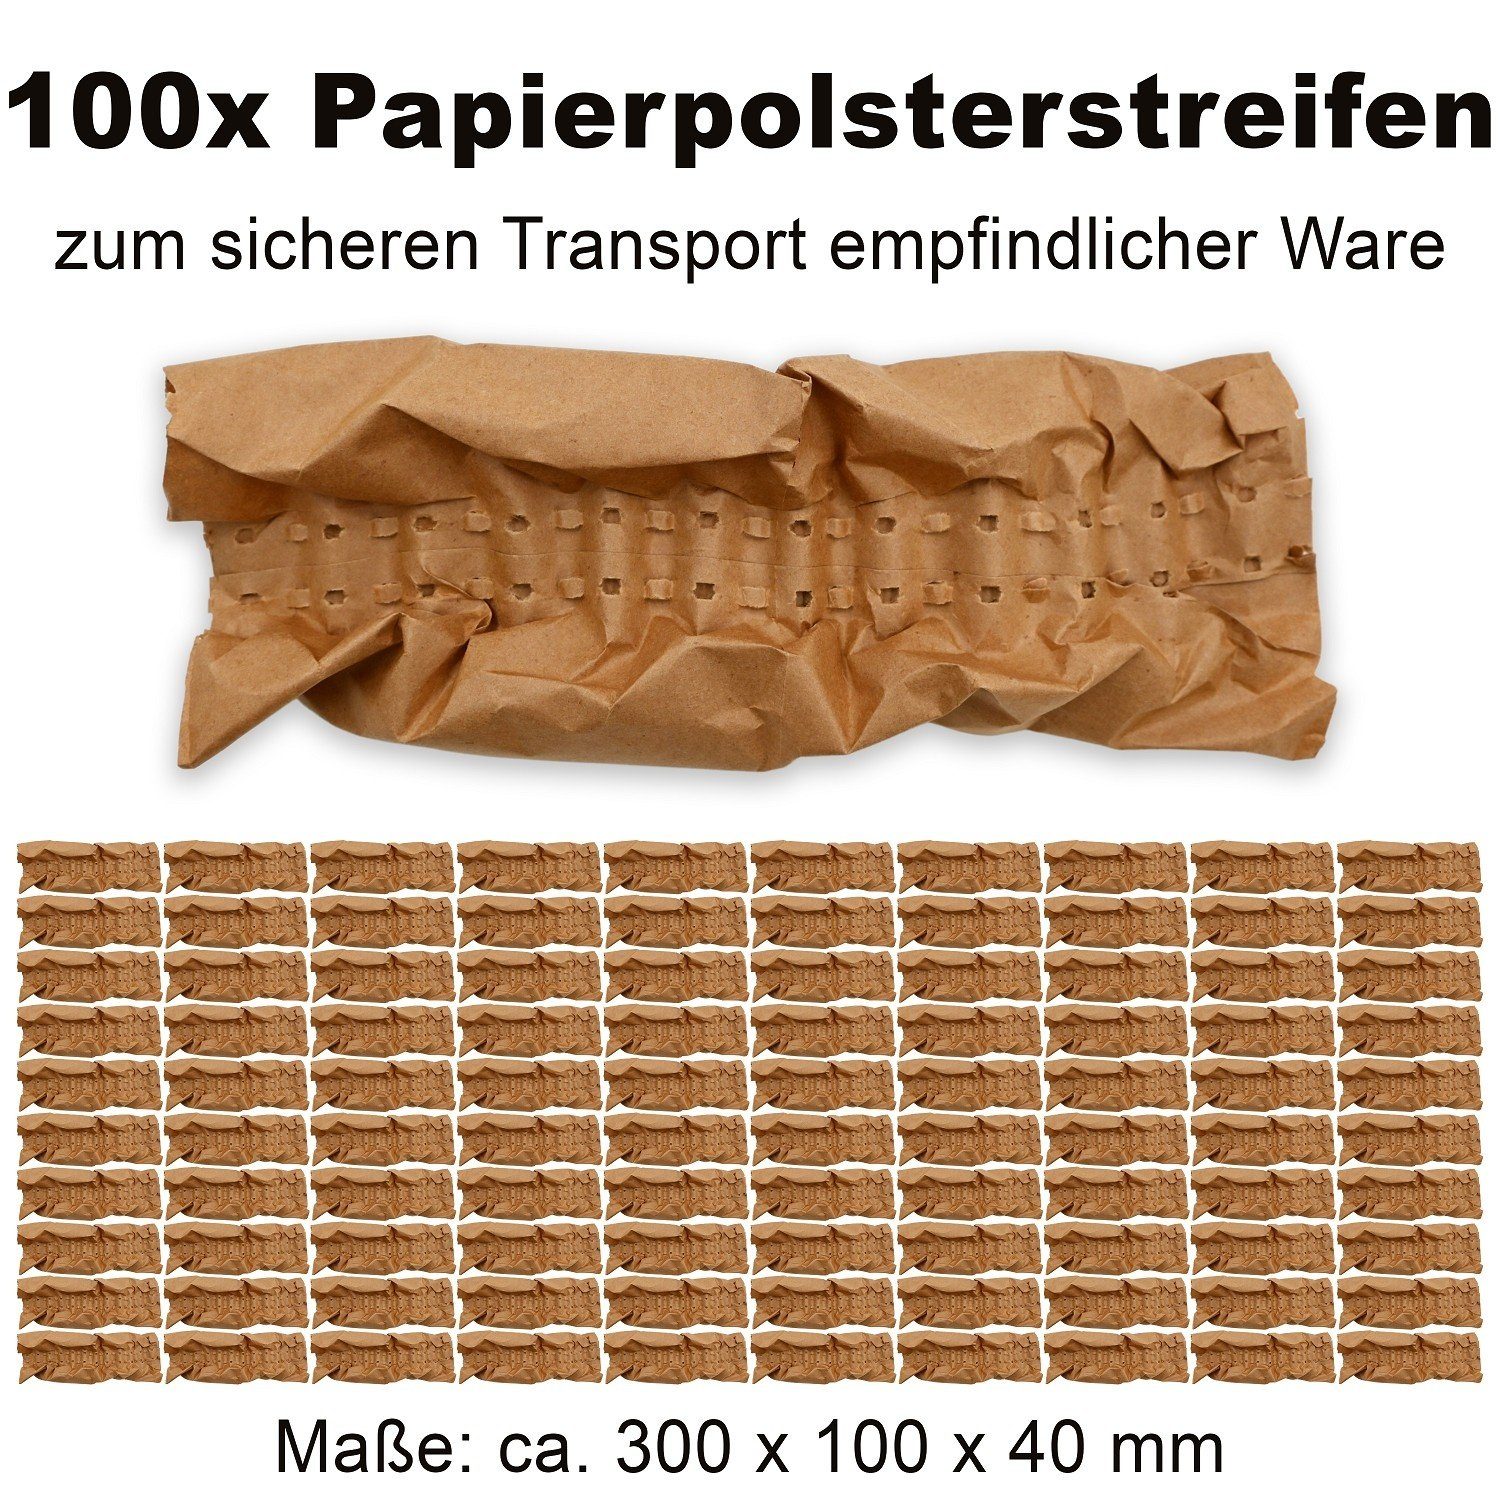 300 ca. 100 x mm x Packpapier St Stück, 100 Papierpolsterstreifen markenlose 100 40